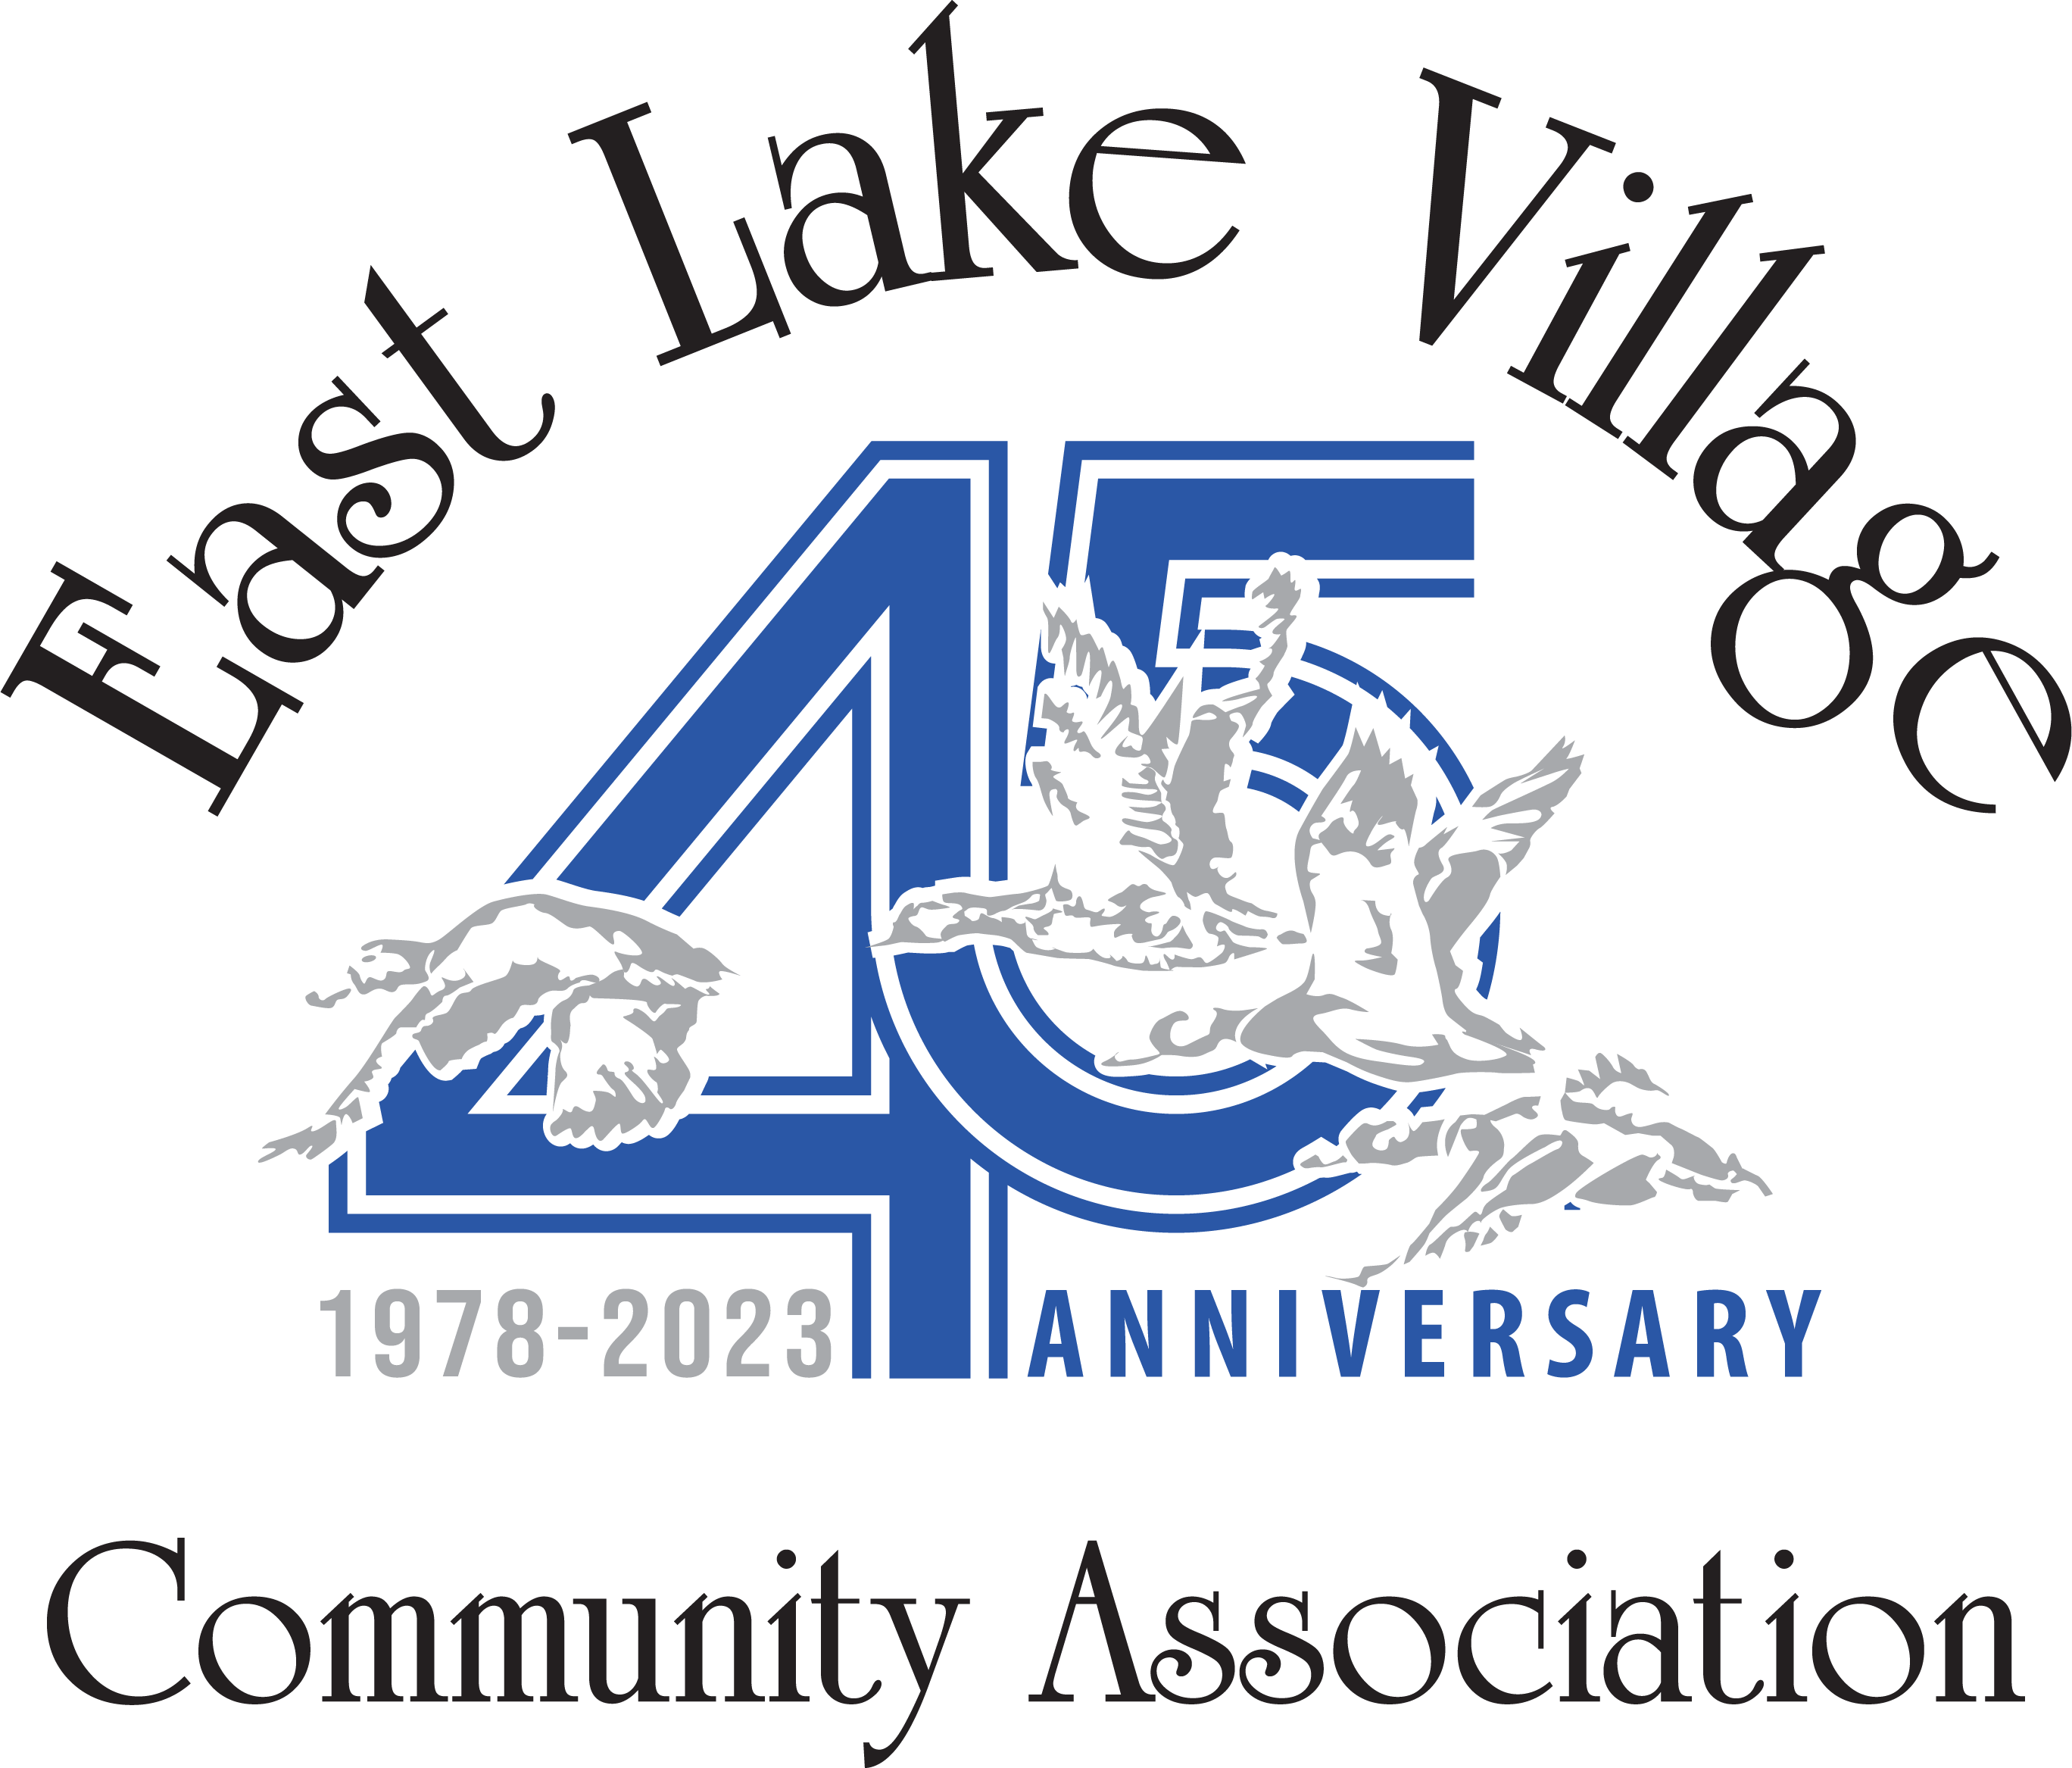 East Lake Village Community Association Logo